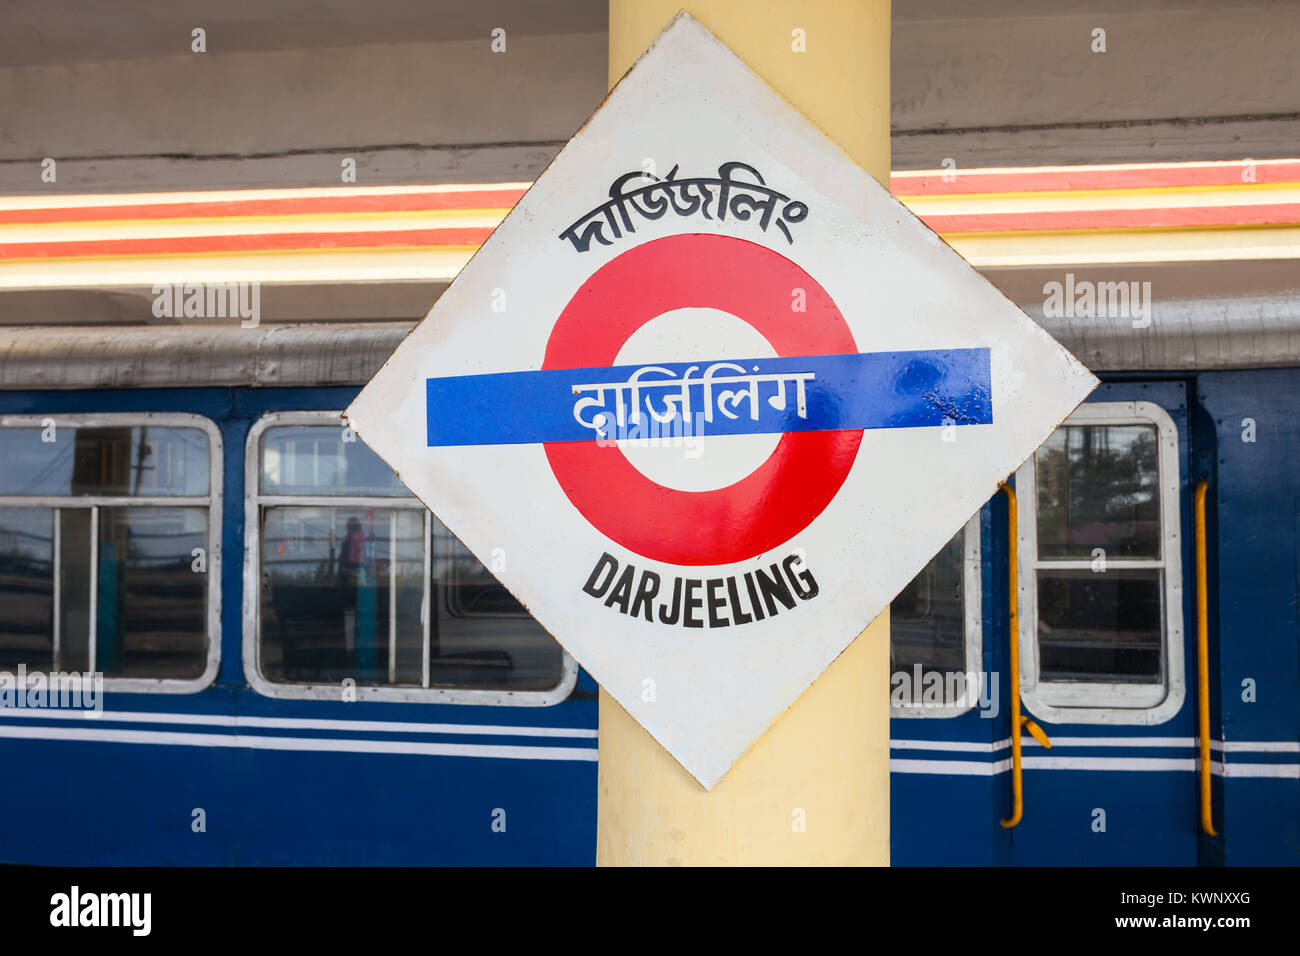 Darjeeling railway station sign and train on background in Darjeeling, India Stock Photo